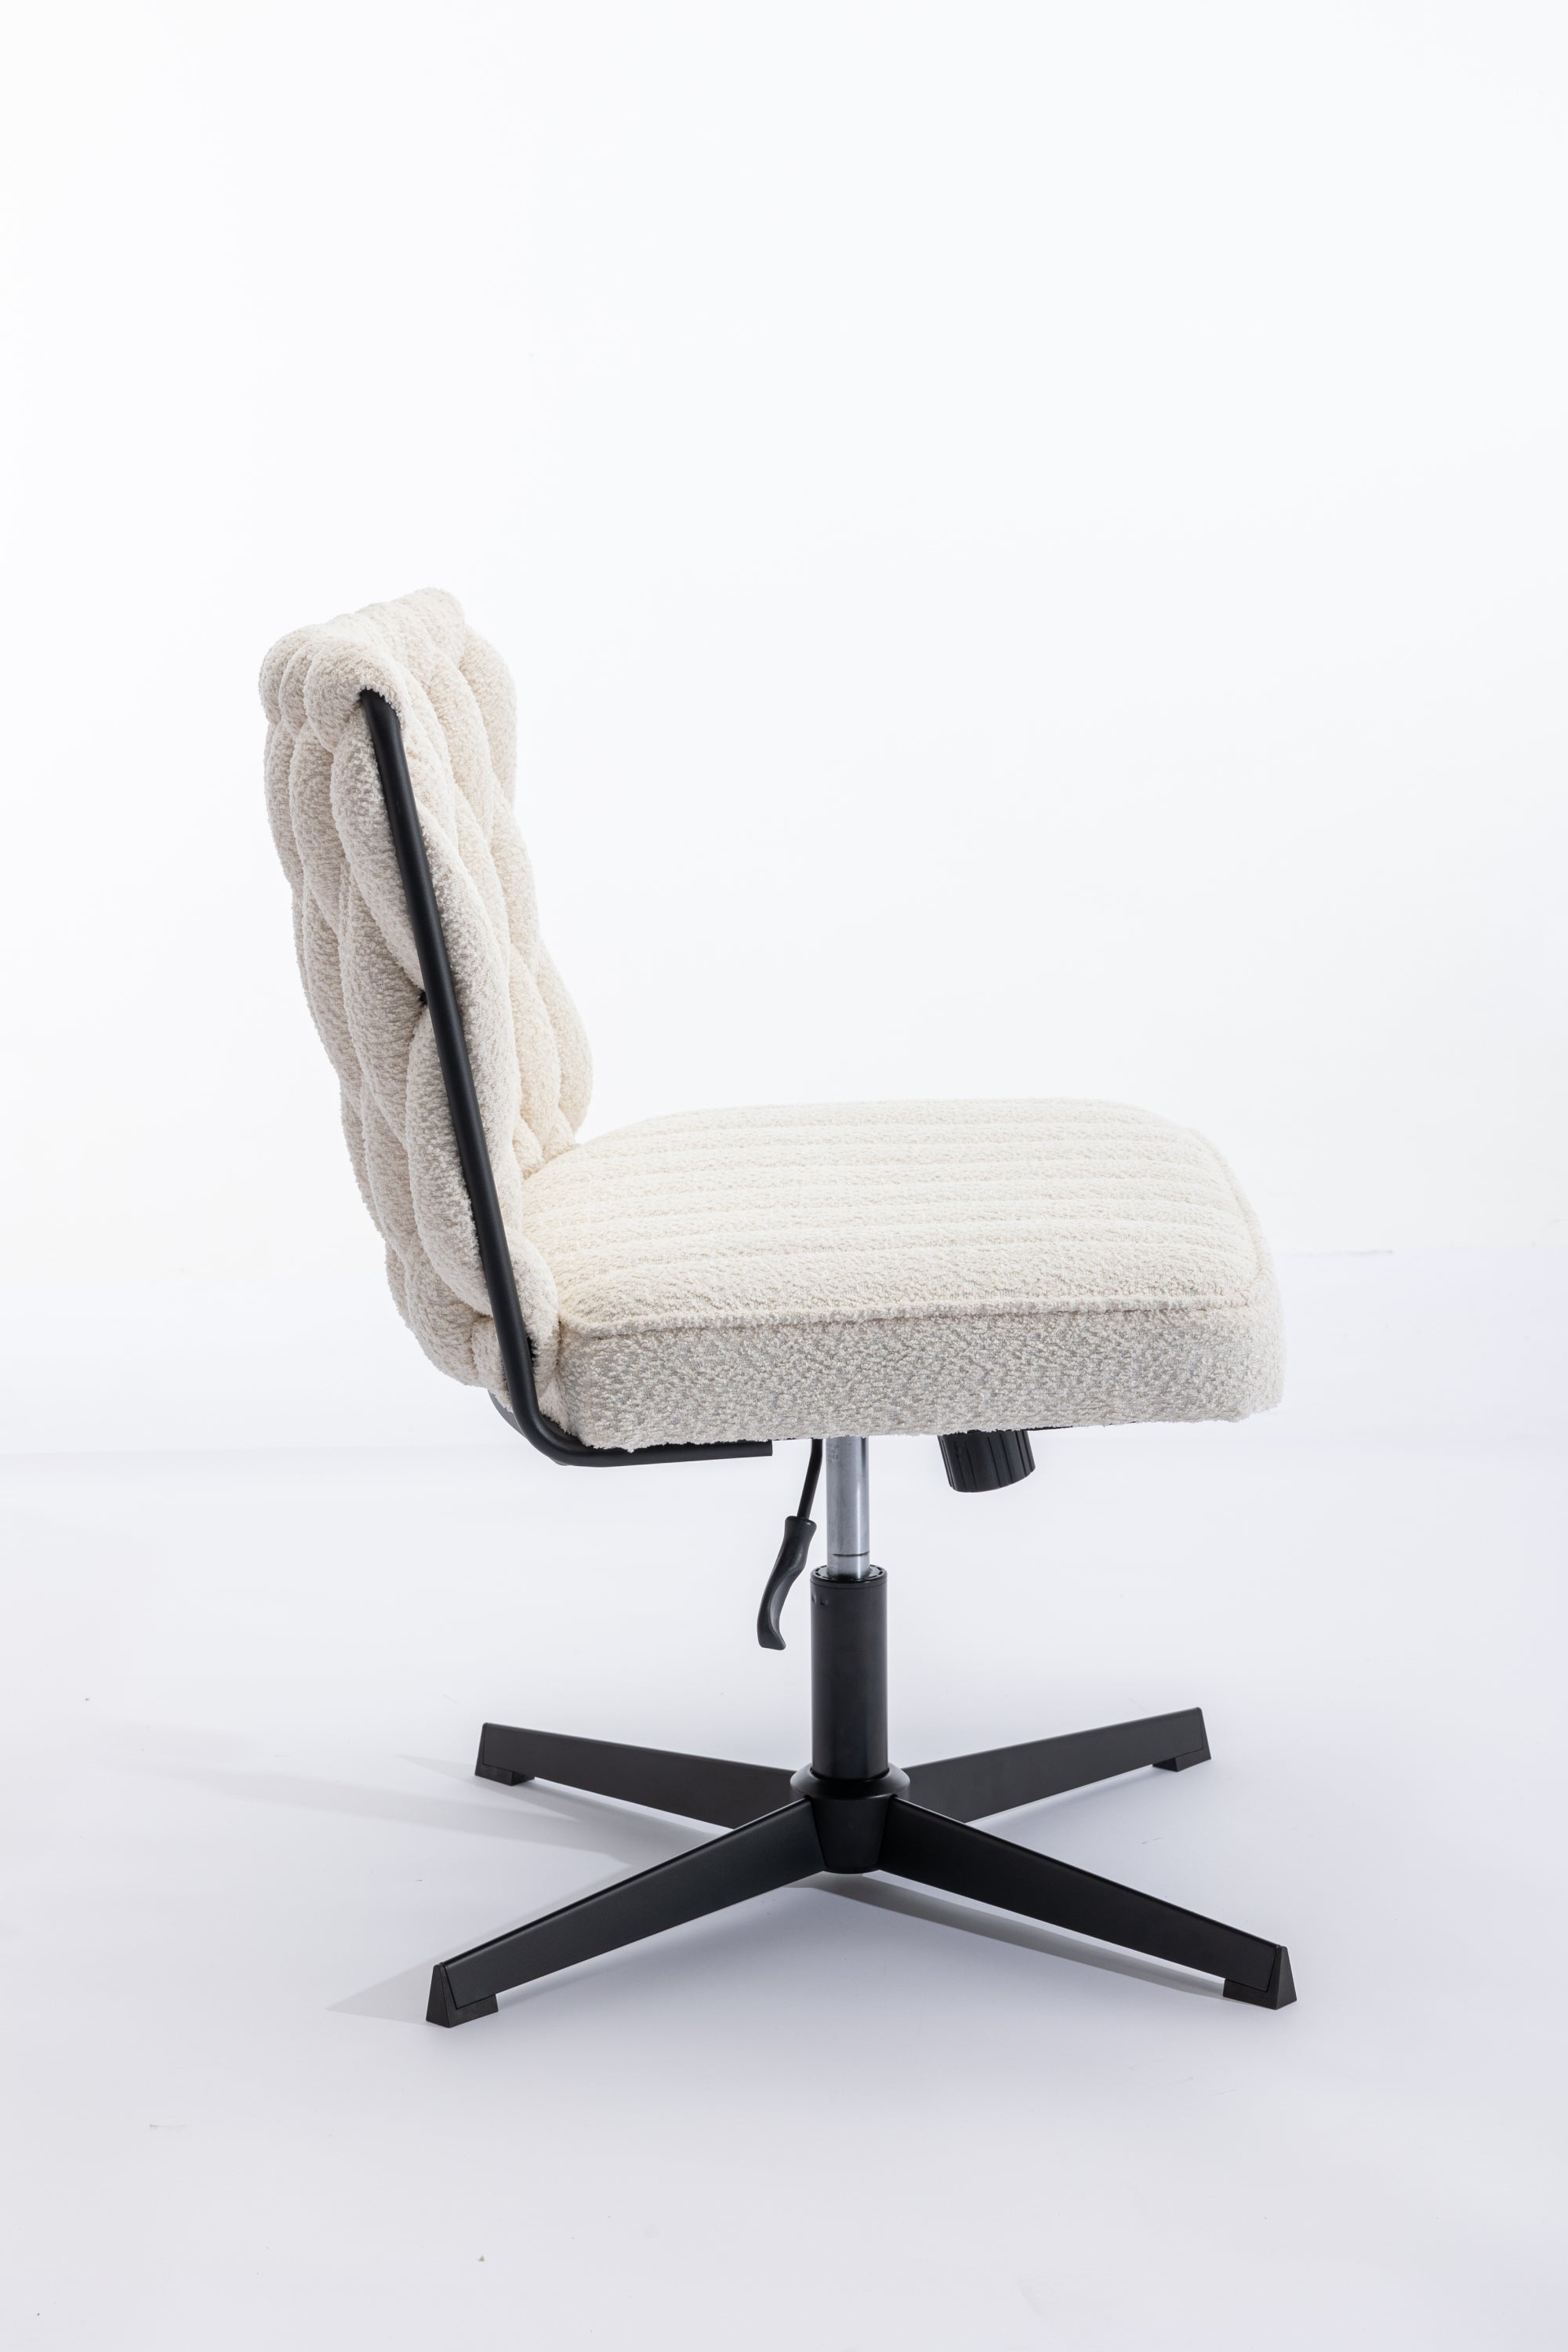 Armless Office Desk Chair No Wheels - White